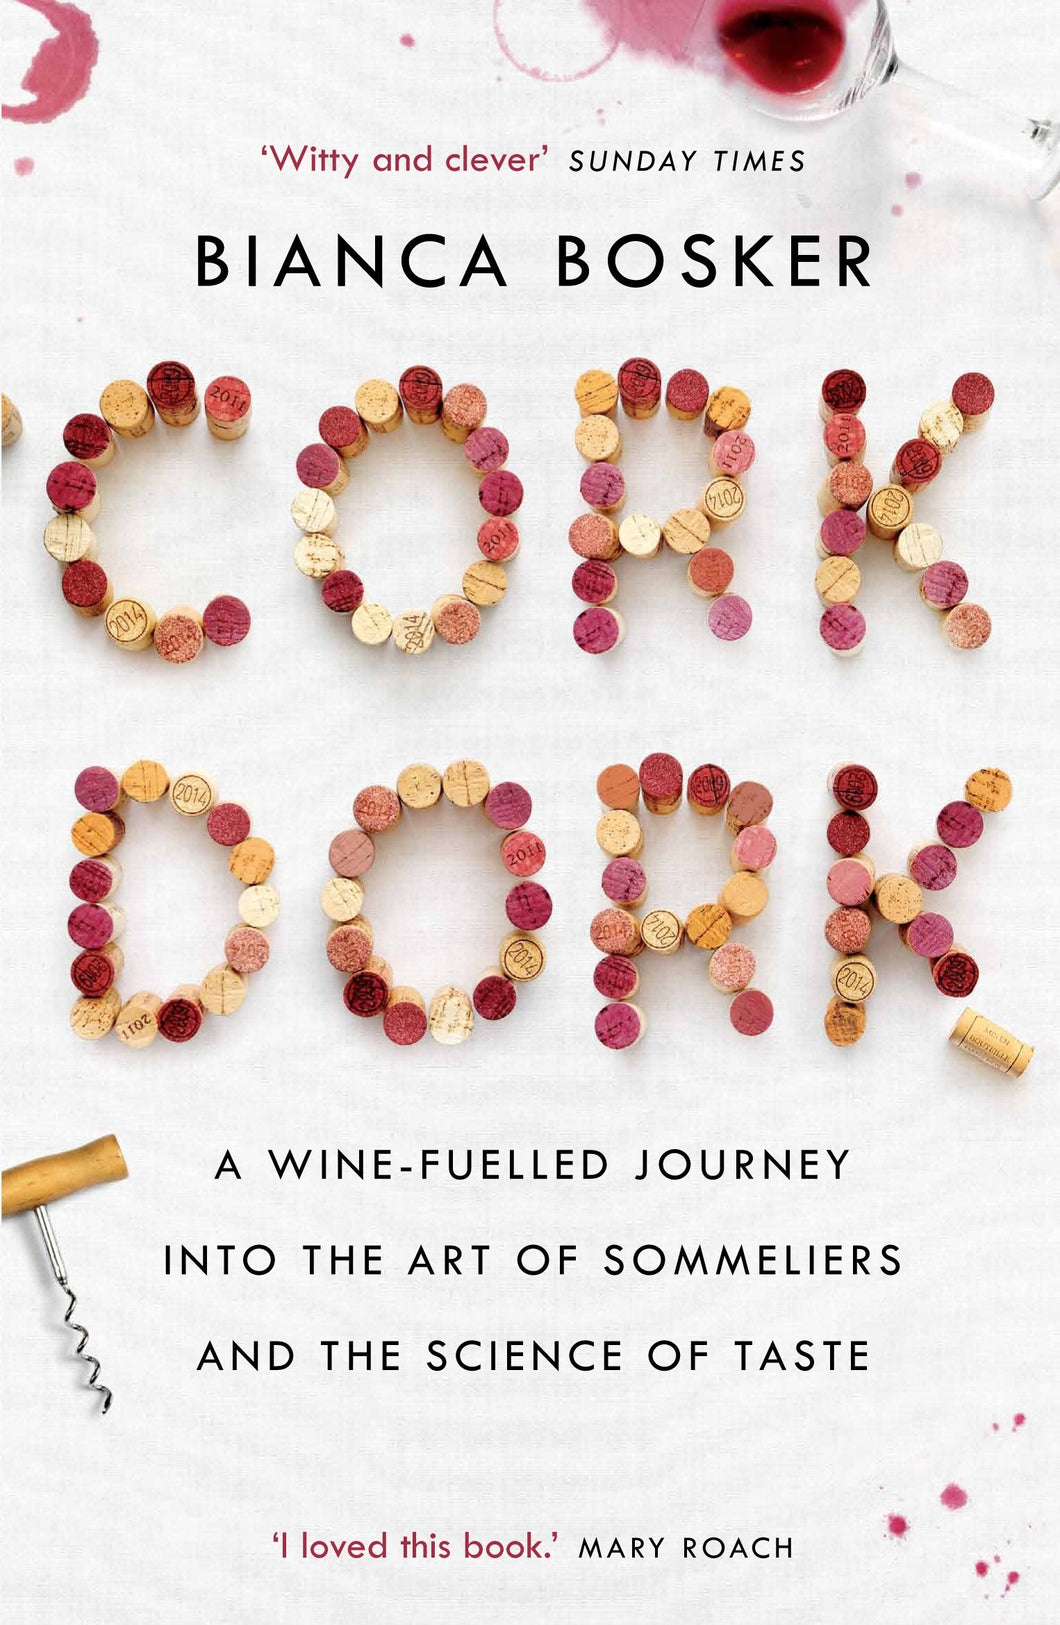 Cork Dork by Bianca Bosker / Paperback - NEW BOOK OR BOOK BOX